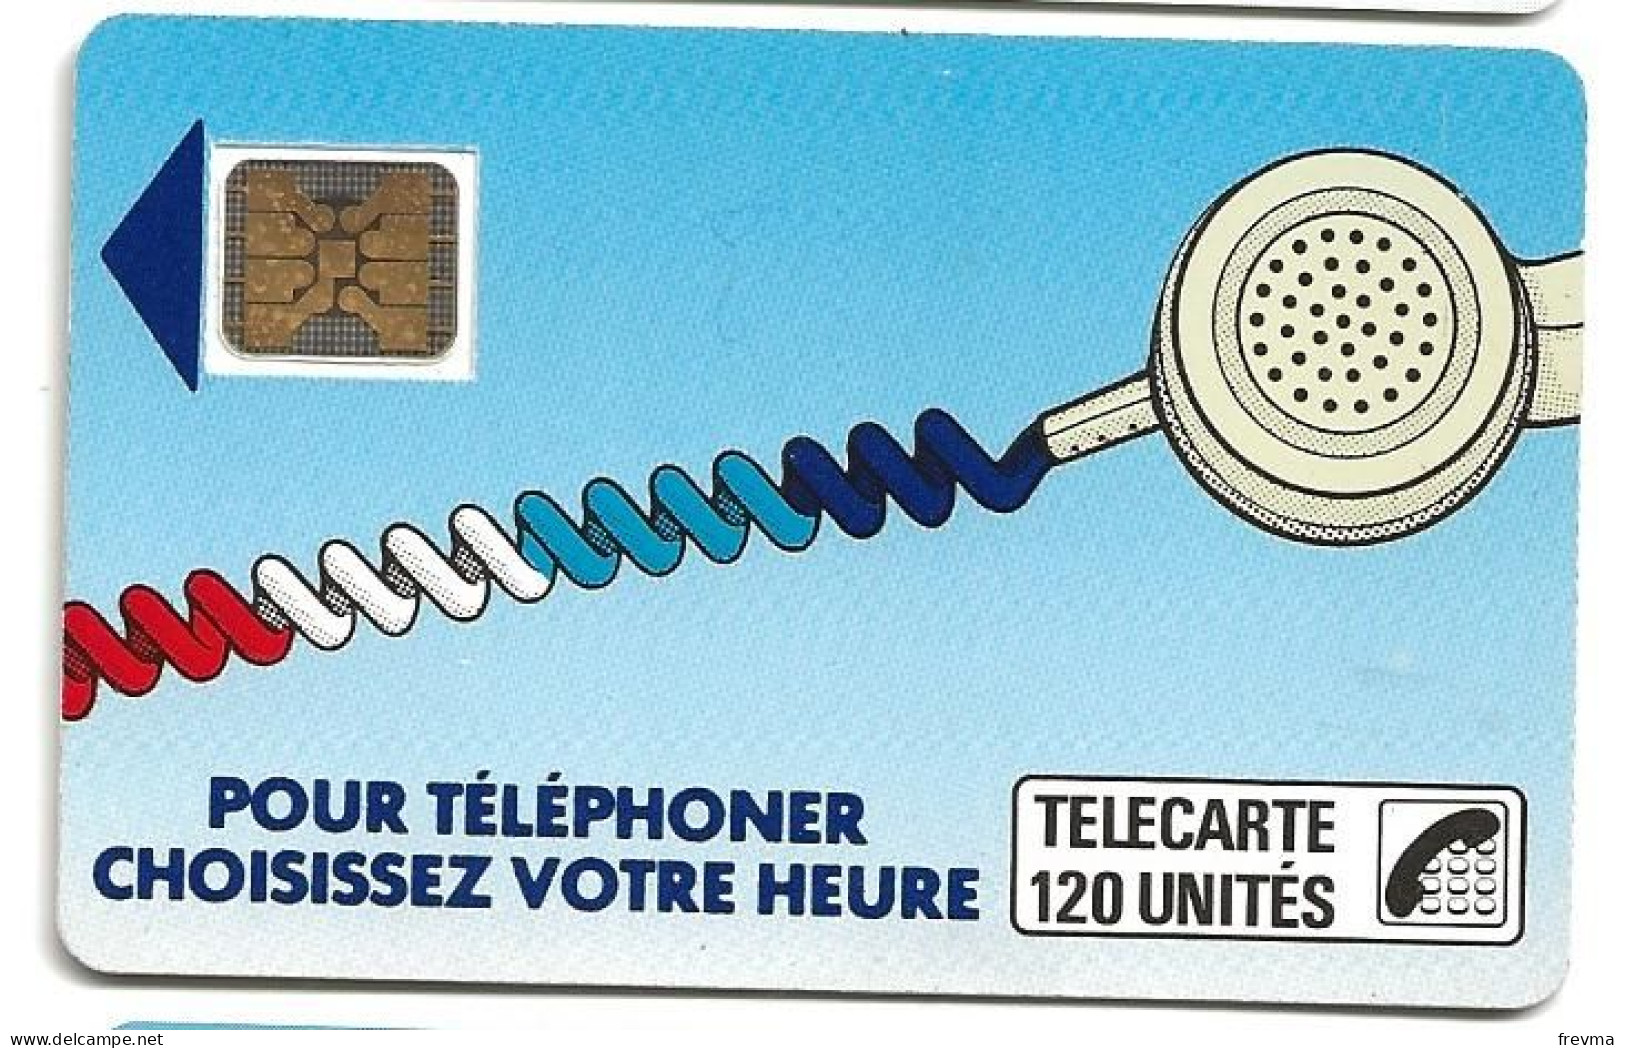 Telecarte K 10 120 Unités SC4 - Telefonschnur (Cordon)